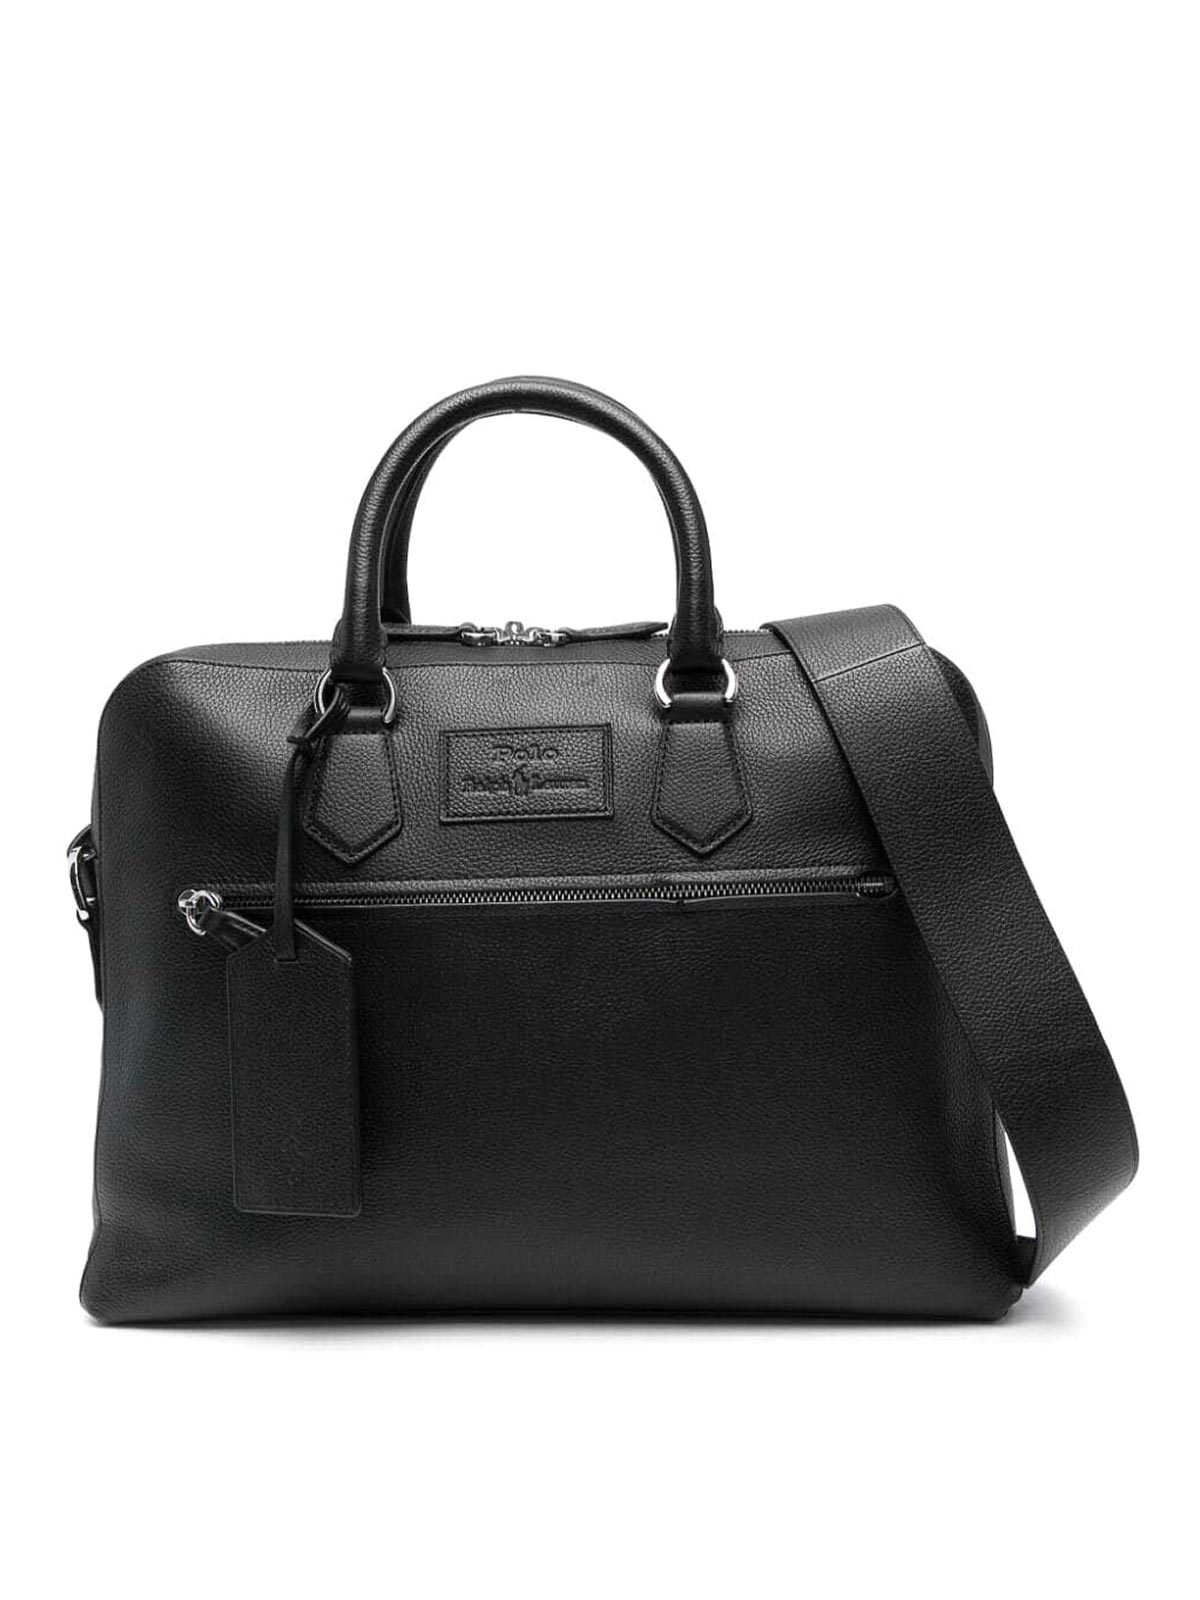 Polo Ralph Lauren Tote Bag In Black